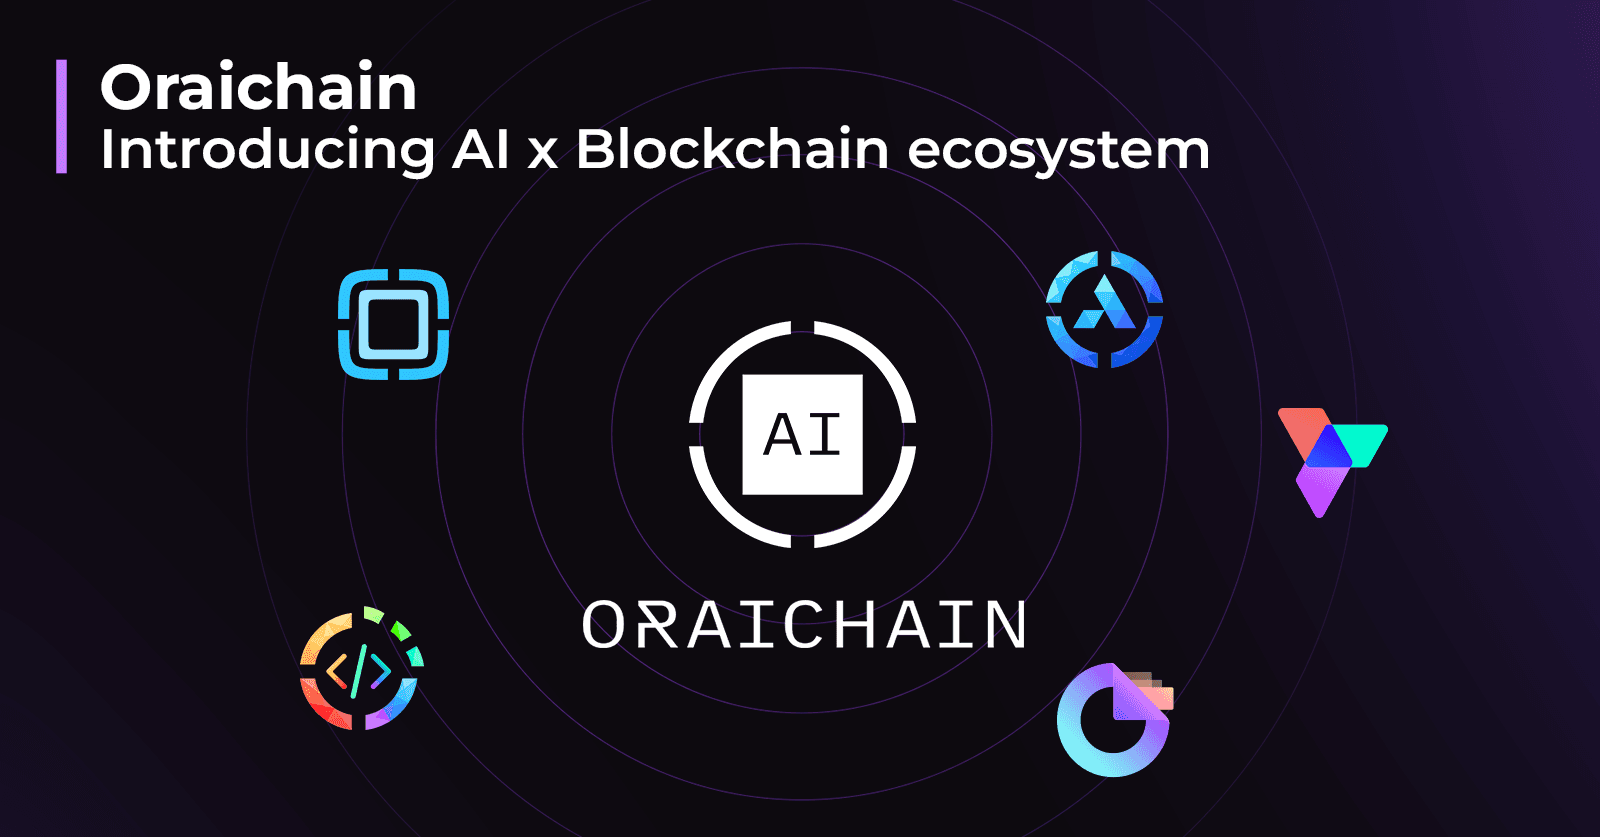 An introduction to the AI x Blockchain ecosystem of Oraichain